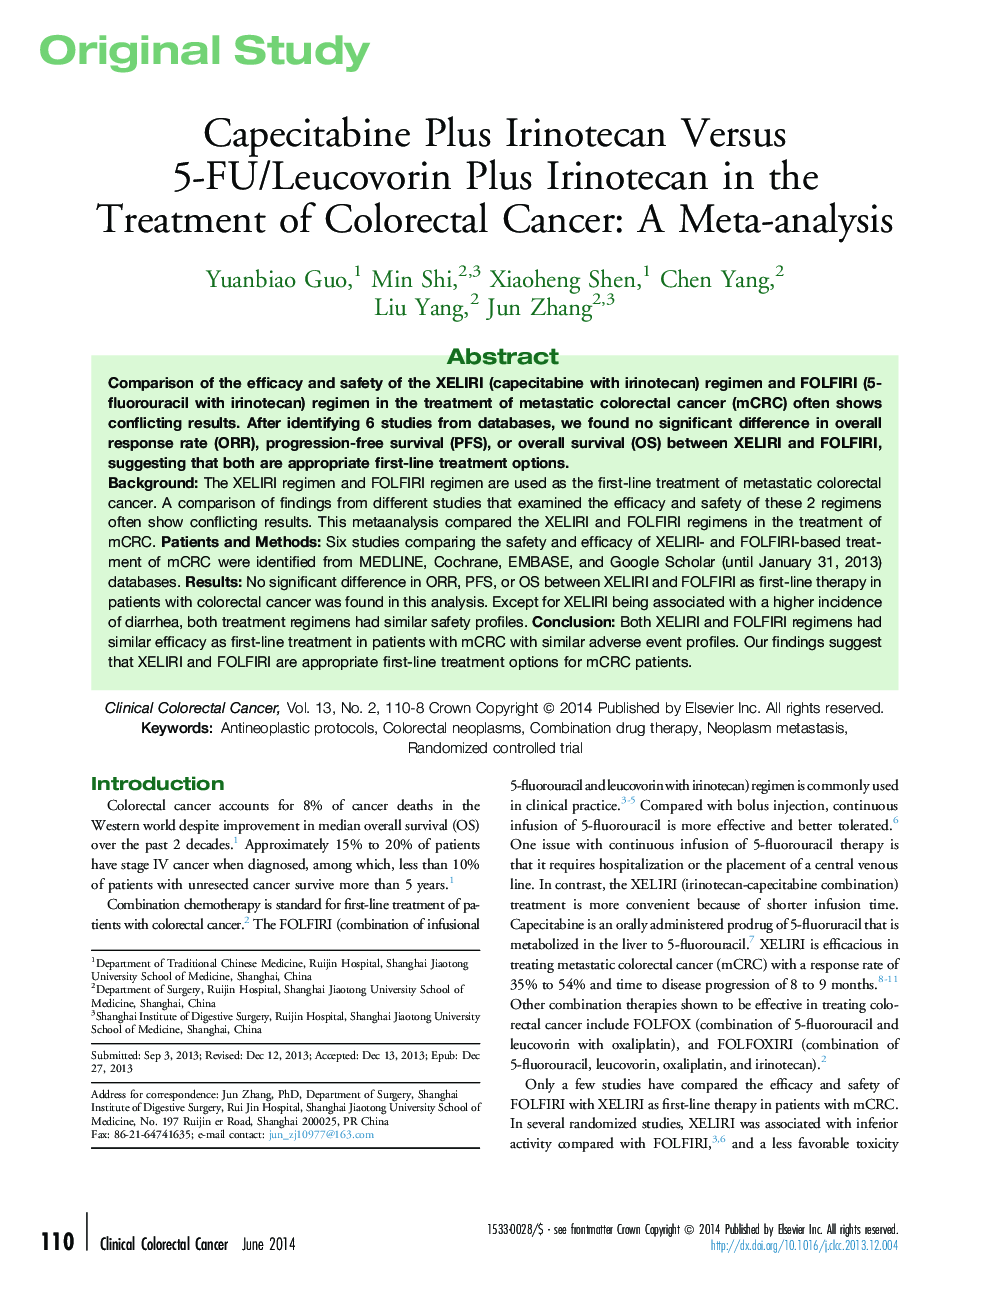 Capecitabine Plus Irinotecan Versus 5-FU/Leucovorin Plus Irinotecan in the Treatment of Colorectal Cancer: A Meta-analysis